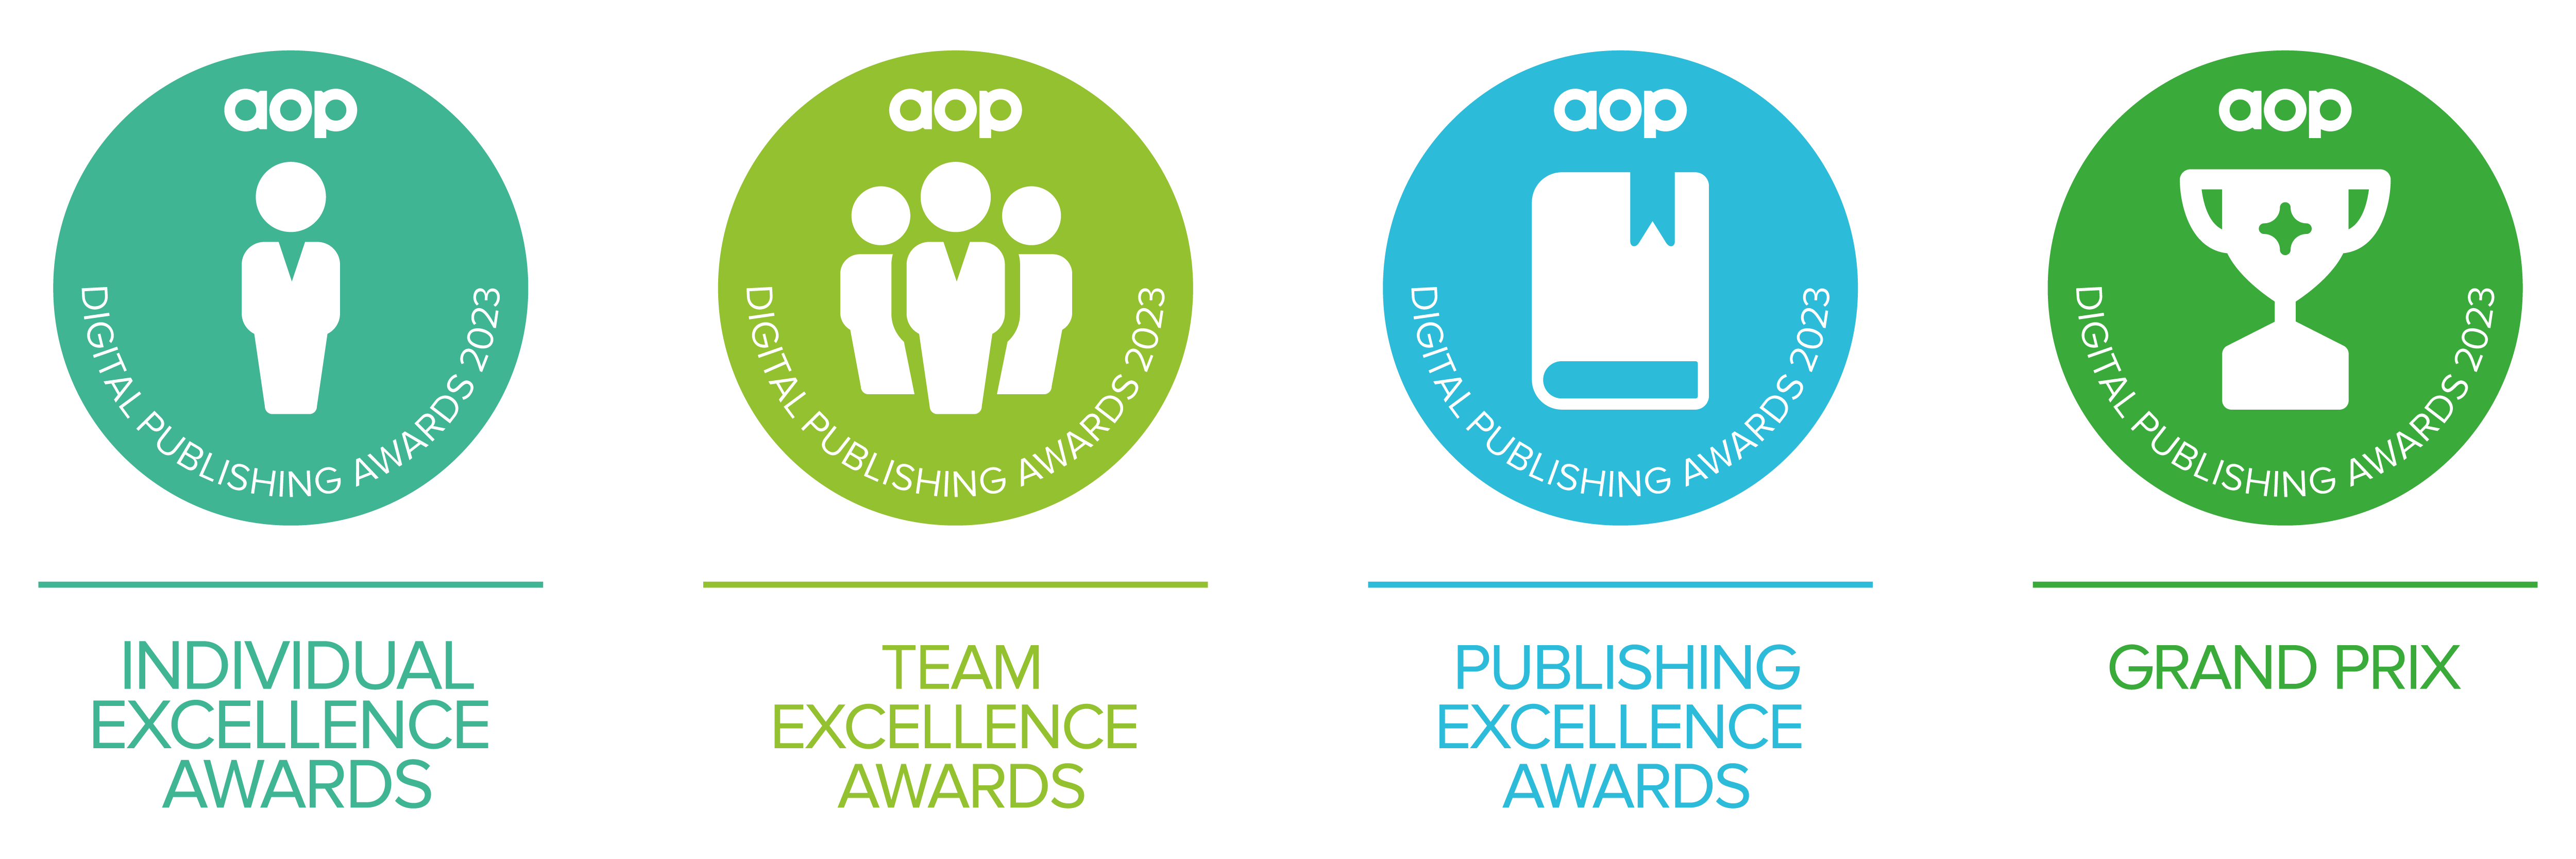 AOP Digital Publishing Award Categories